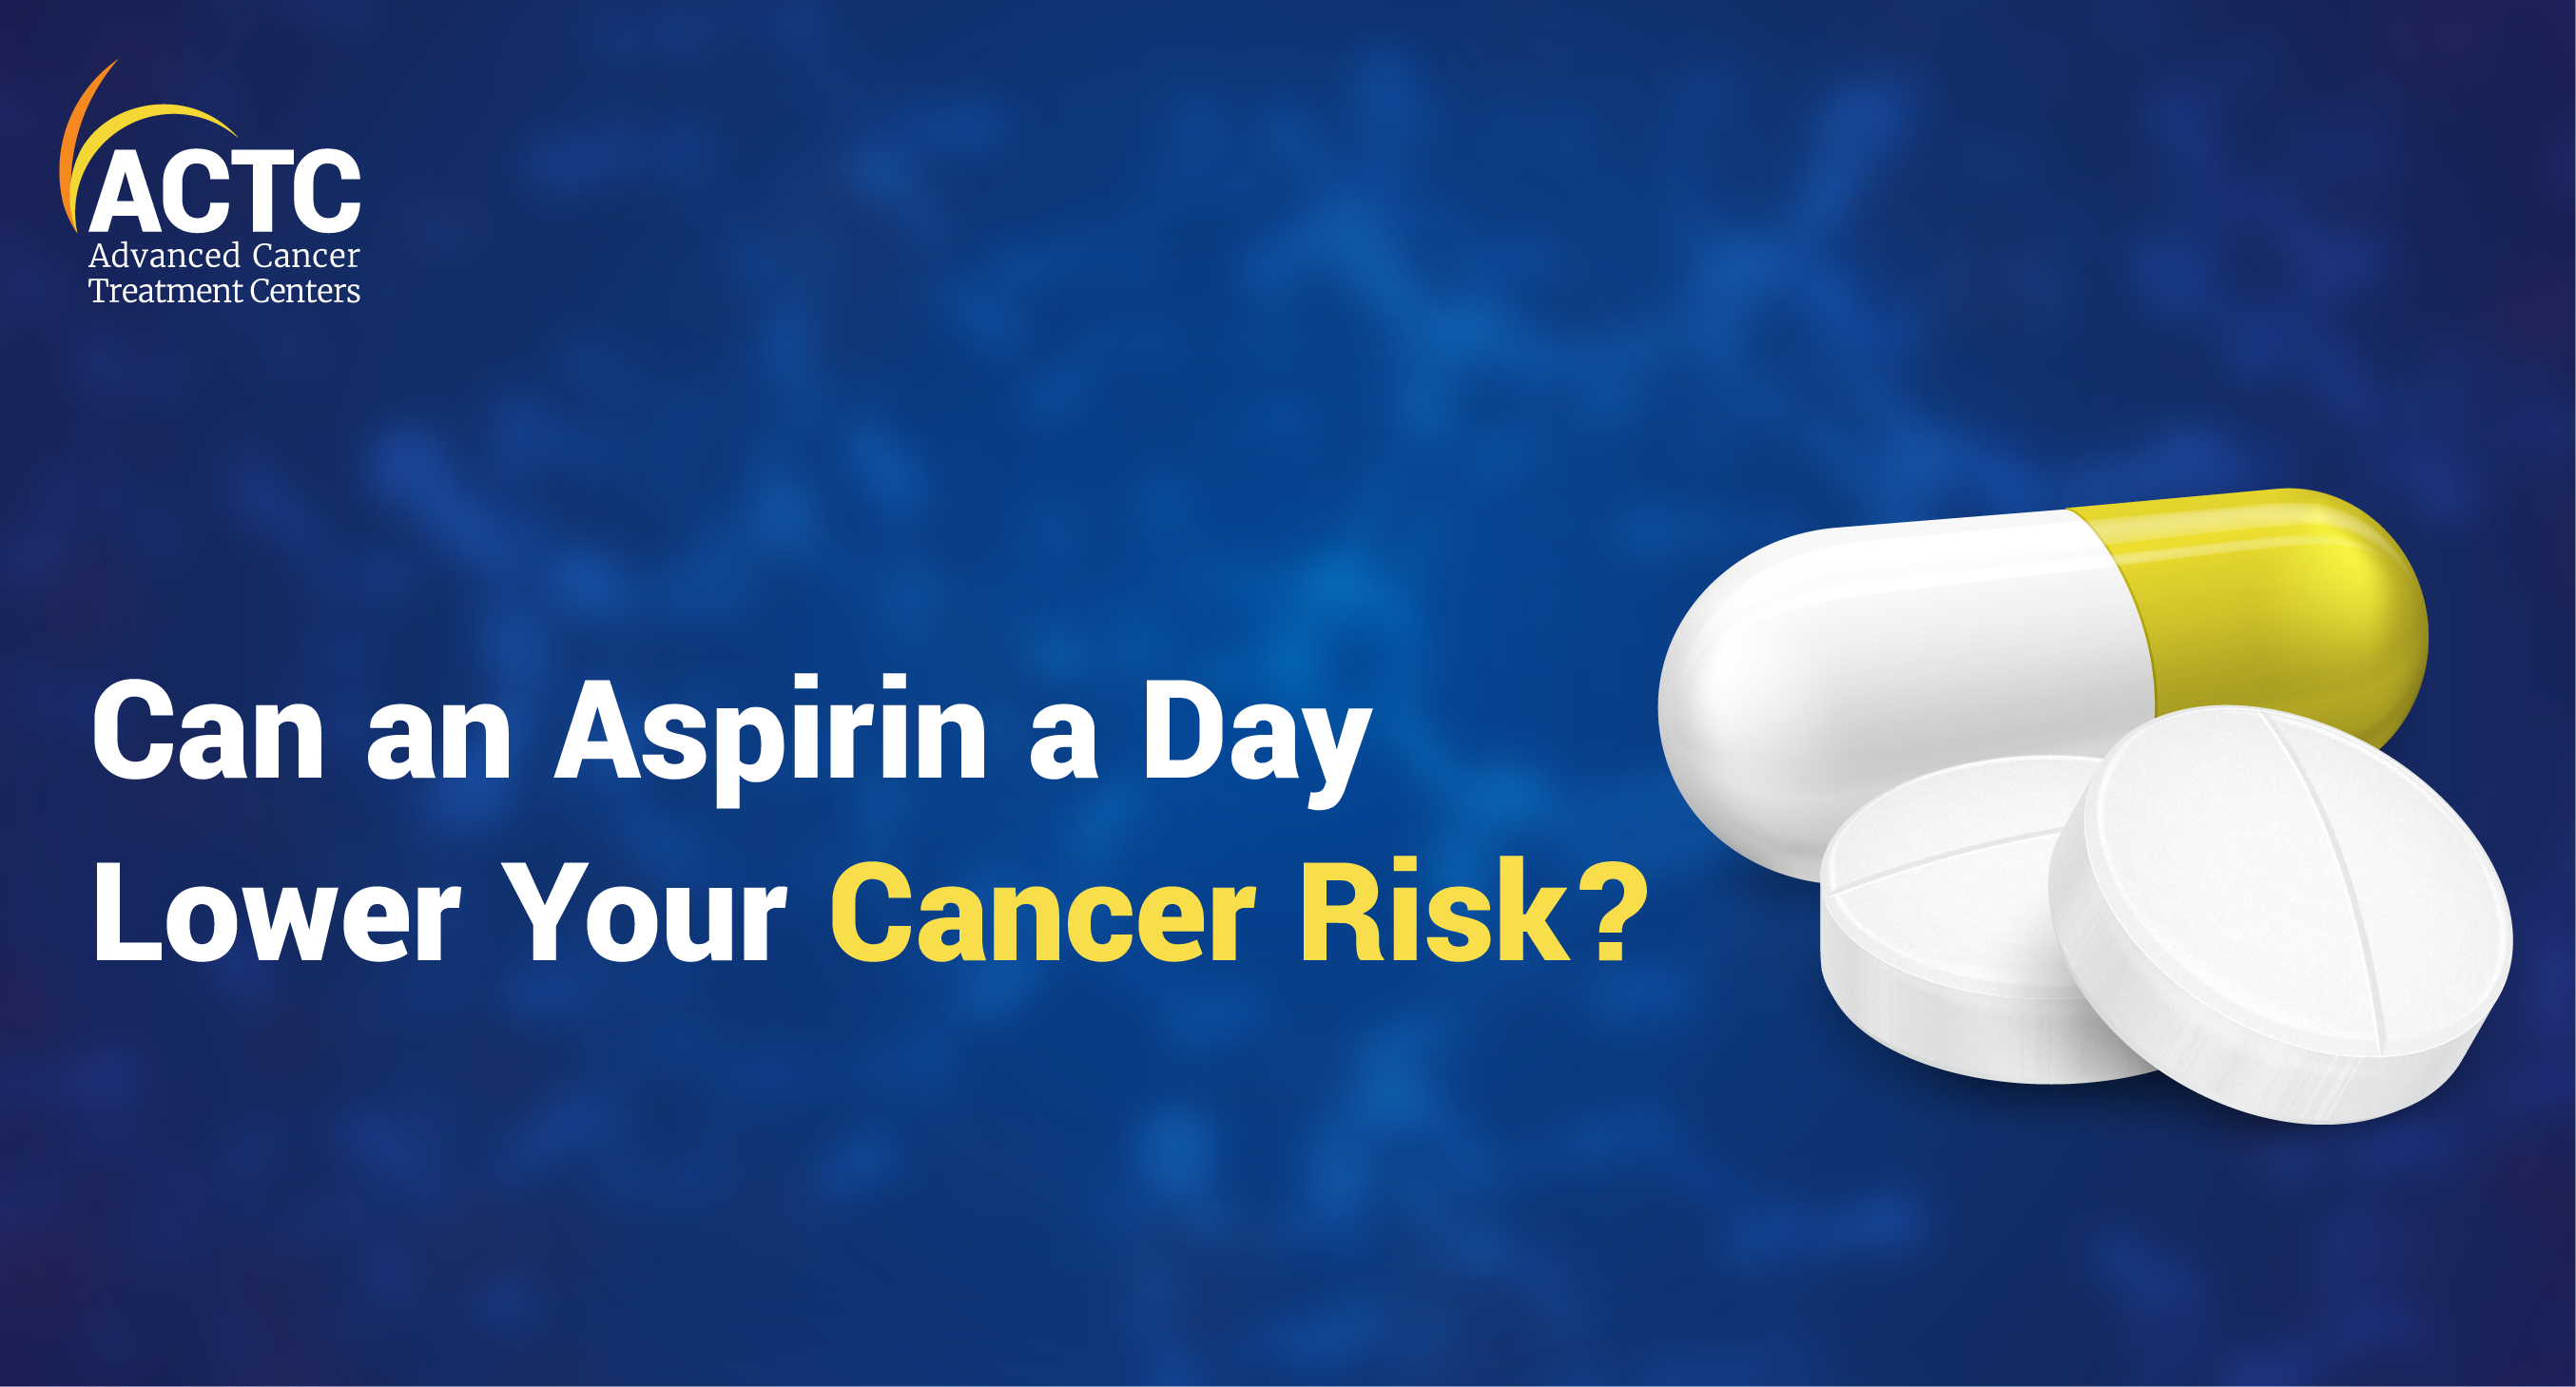 Can an Aspirin a Day Lower Your Cancer Risk